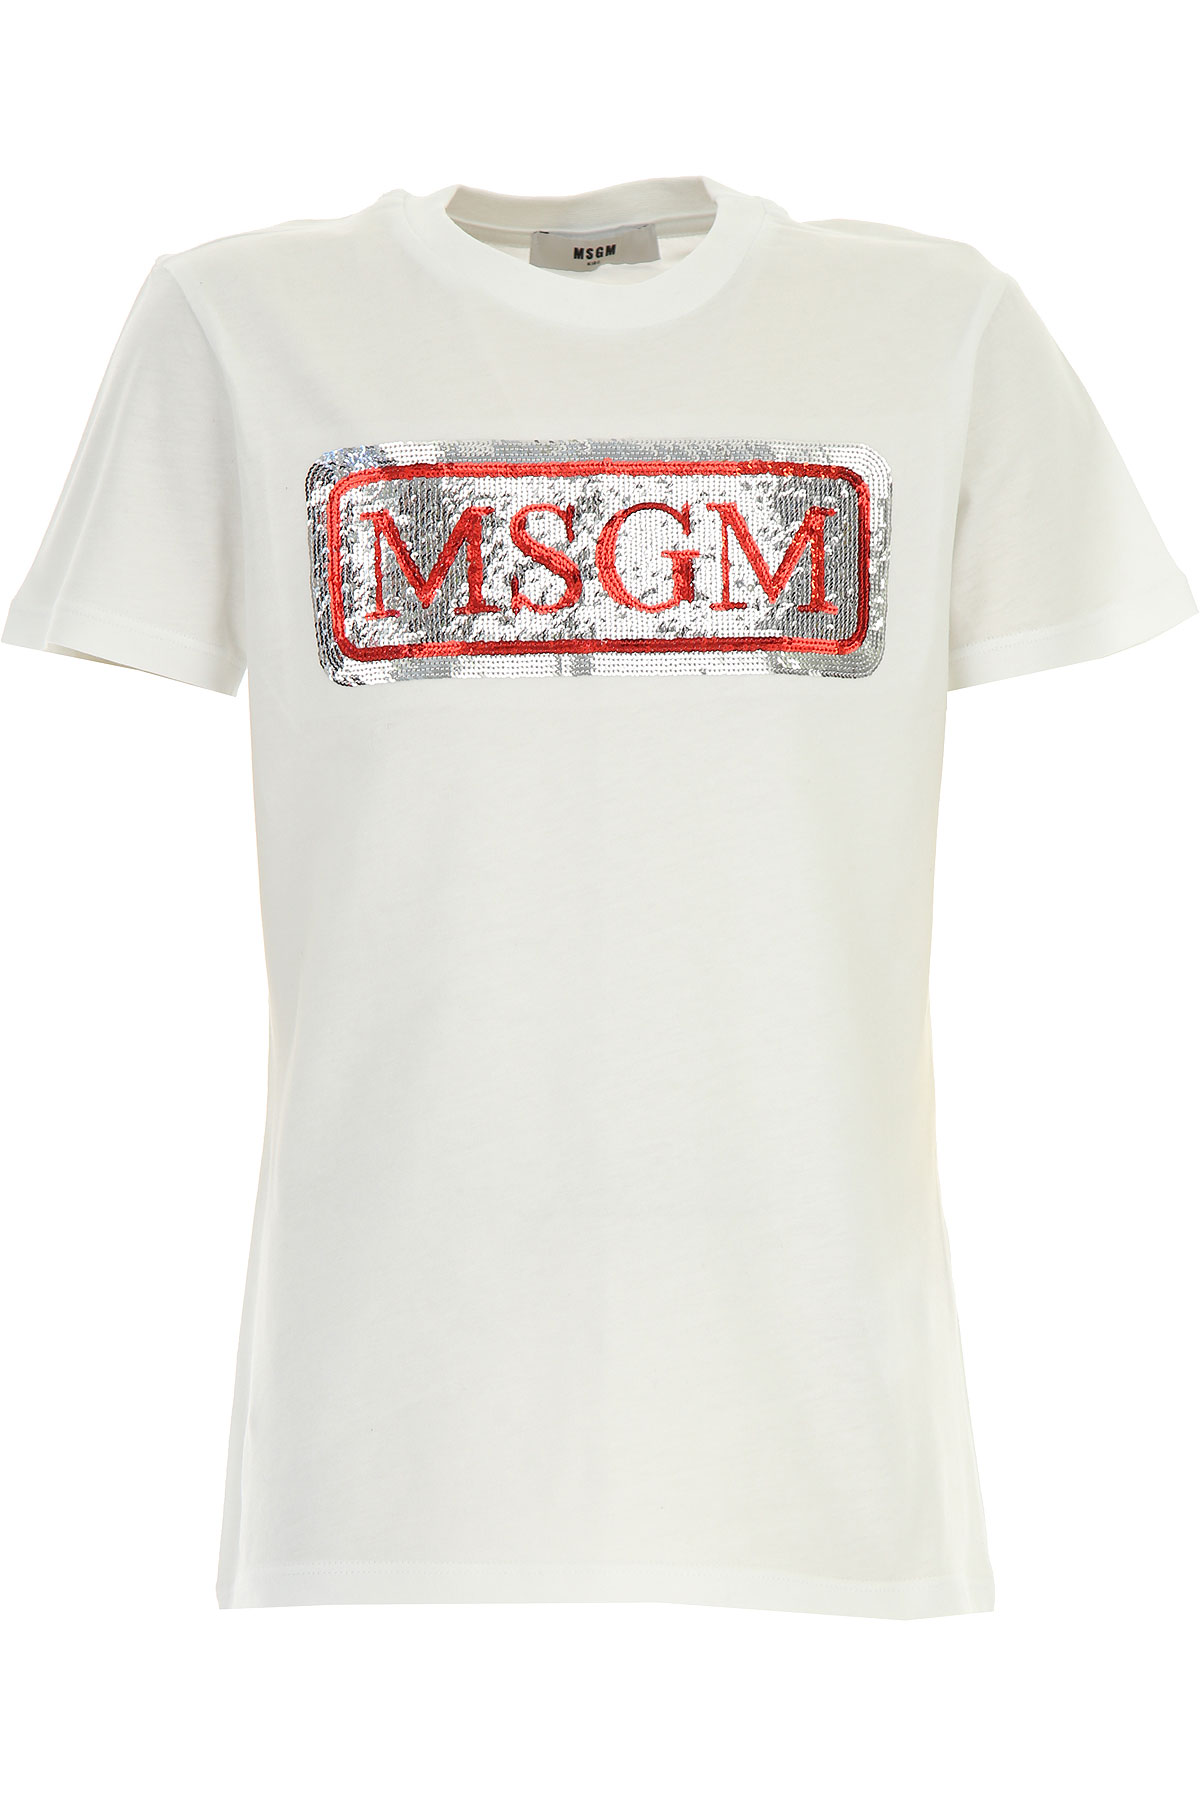 MSGM Kinder T-Shirt für Mädchen Günstig im Sale, Weiss, Baumwolle, 2017, 10Y 12Y 14Y 6Y 8Y